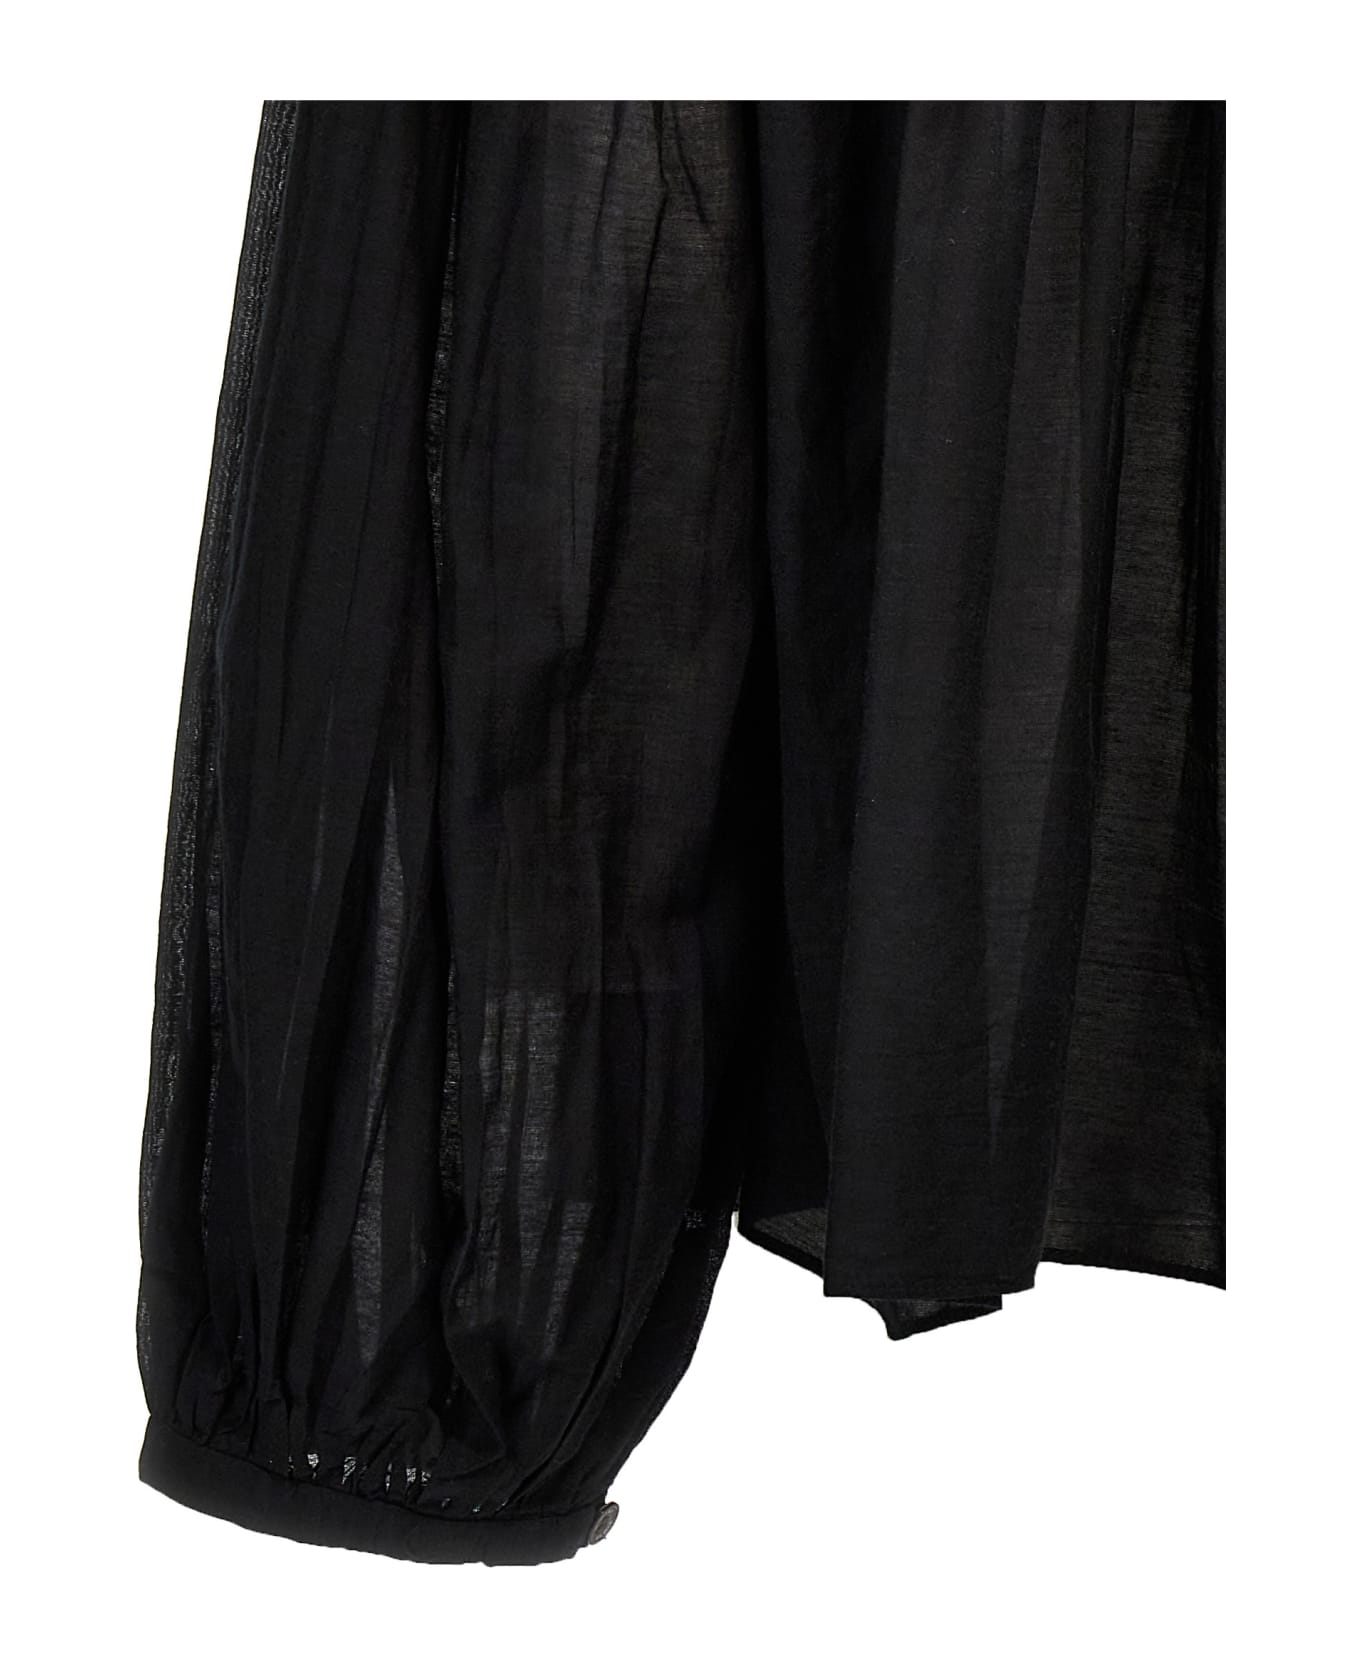 Marant Étoile 'abadi' Shirt - Black  